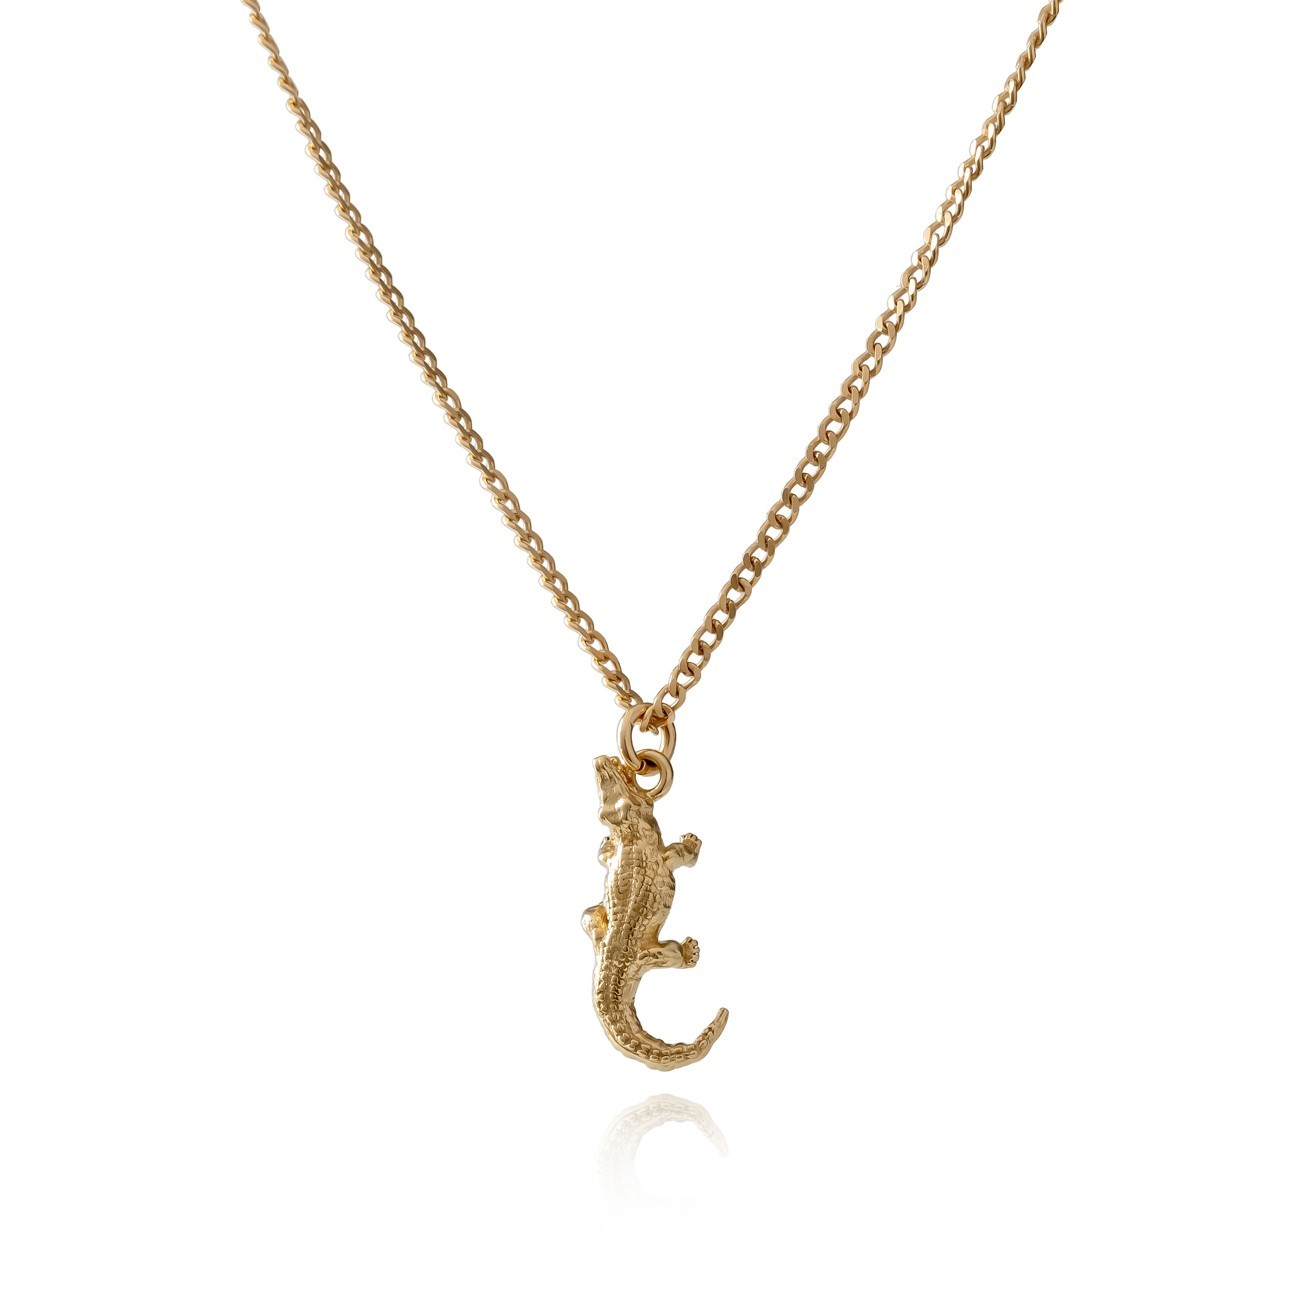 Men's crocodile necklace, sterling silver 925